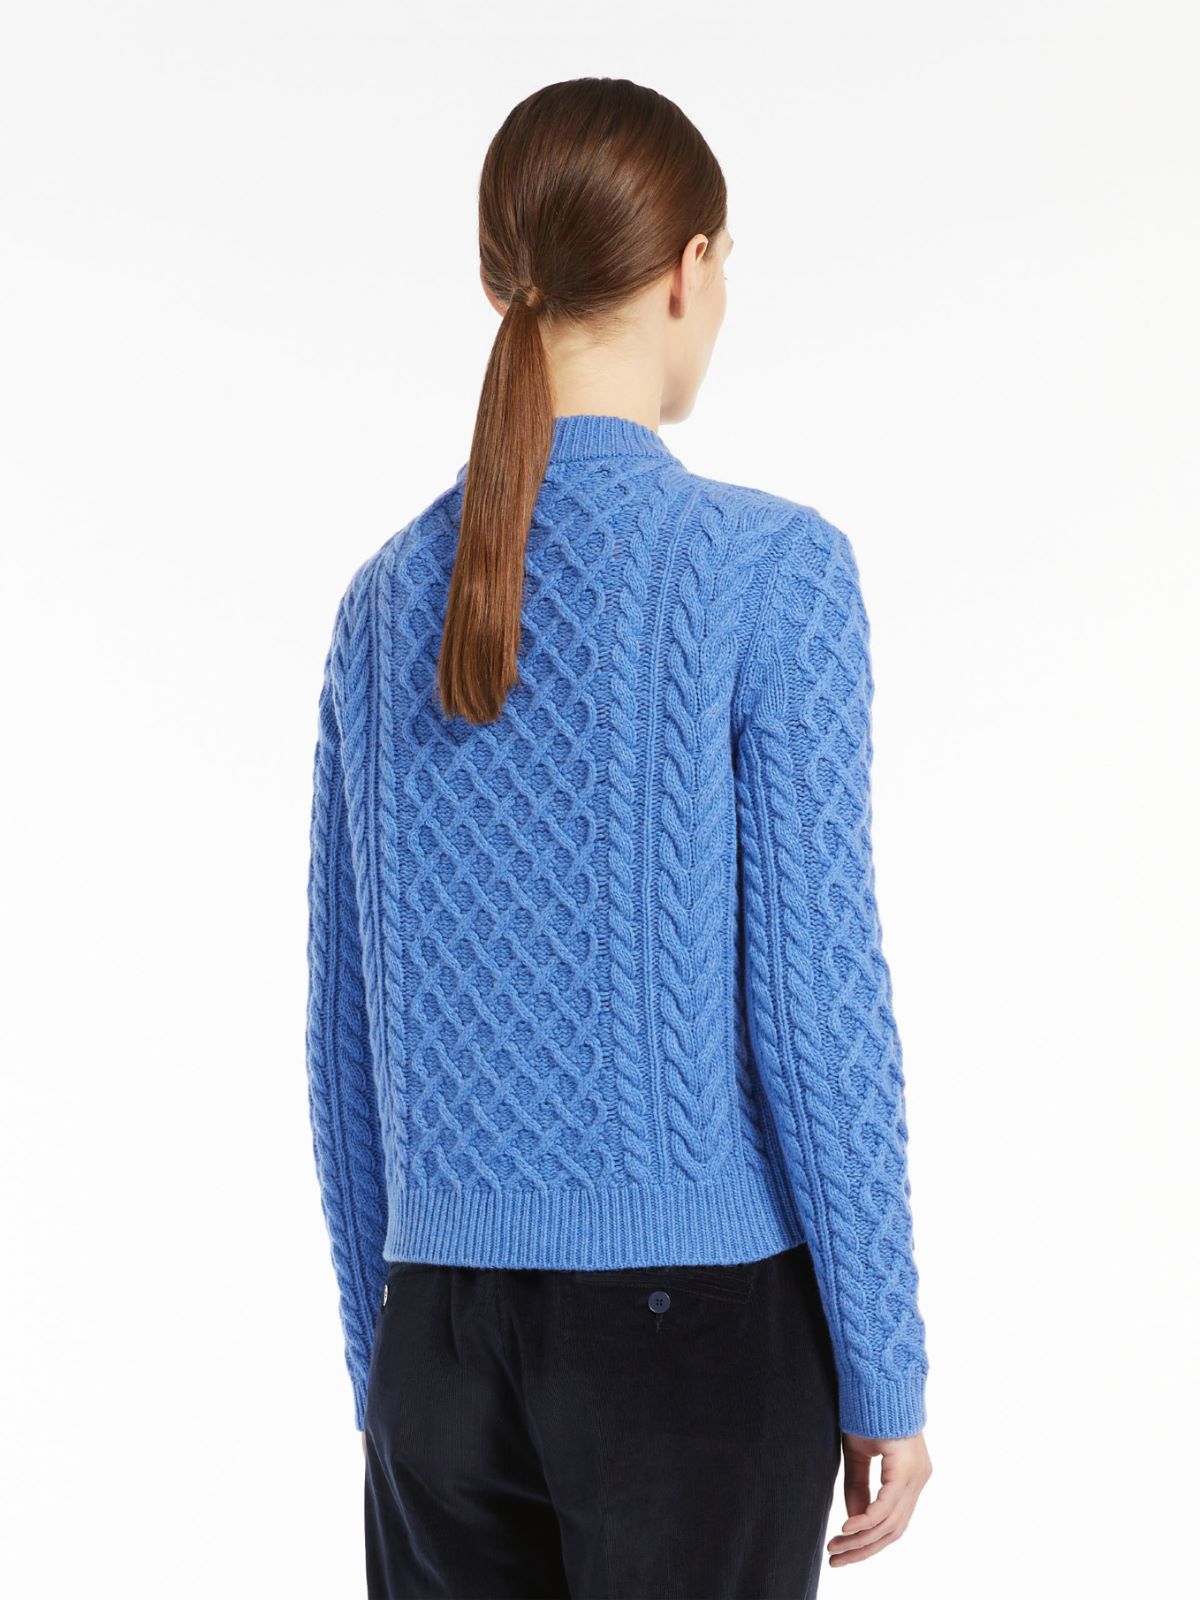 Carded wool sweater Weekend Maxmara